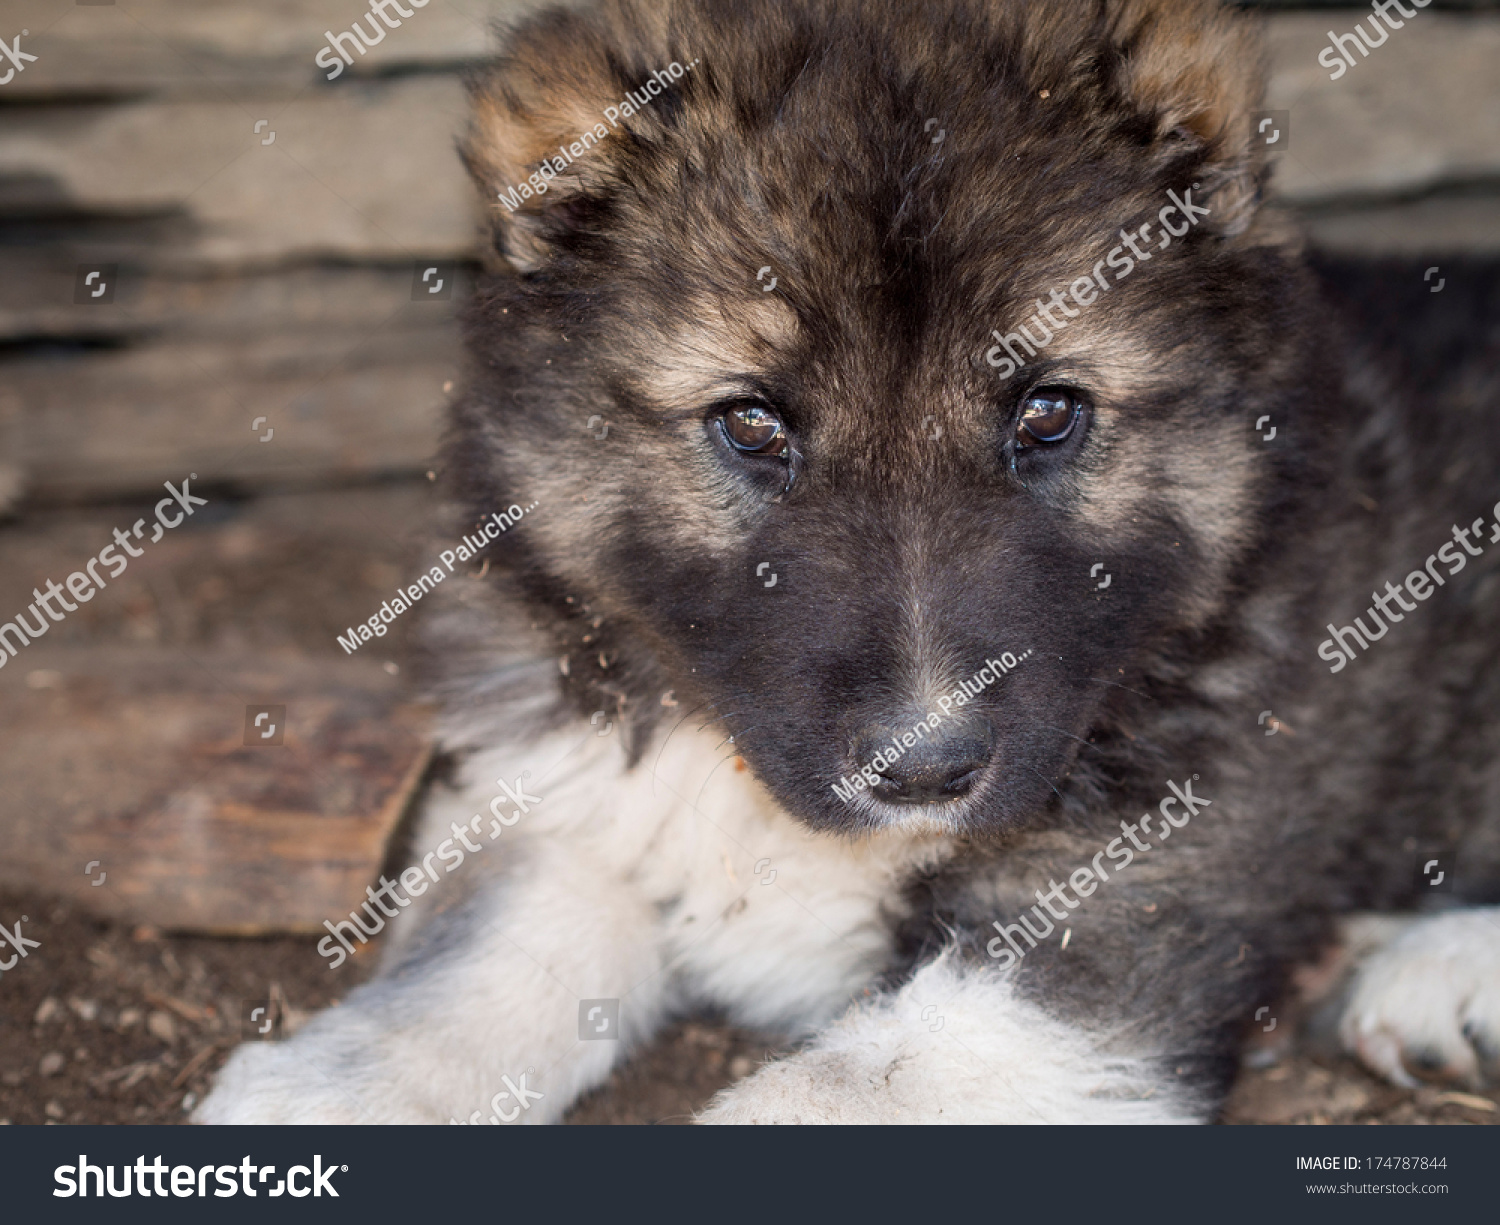 Georgian Shepherd Puppy Cropped Ears Stock Photo Edit Now 174787844